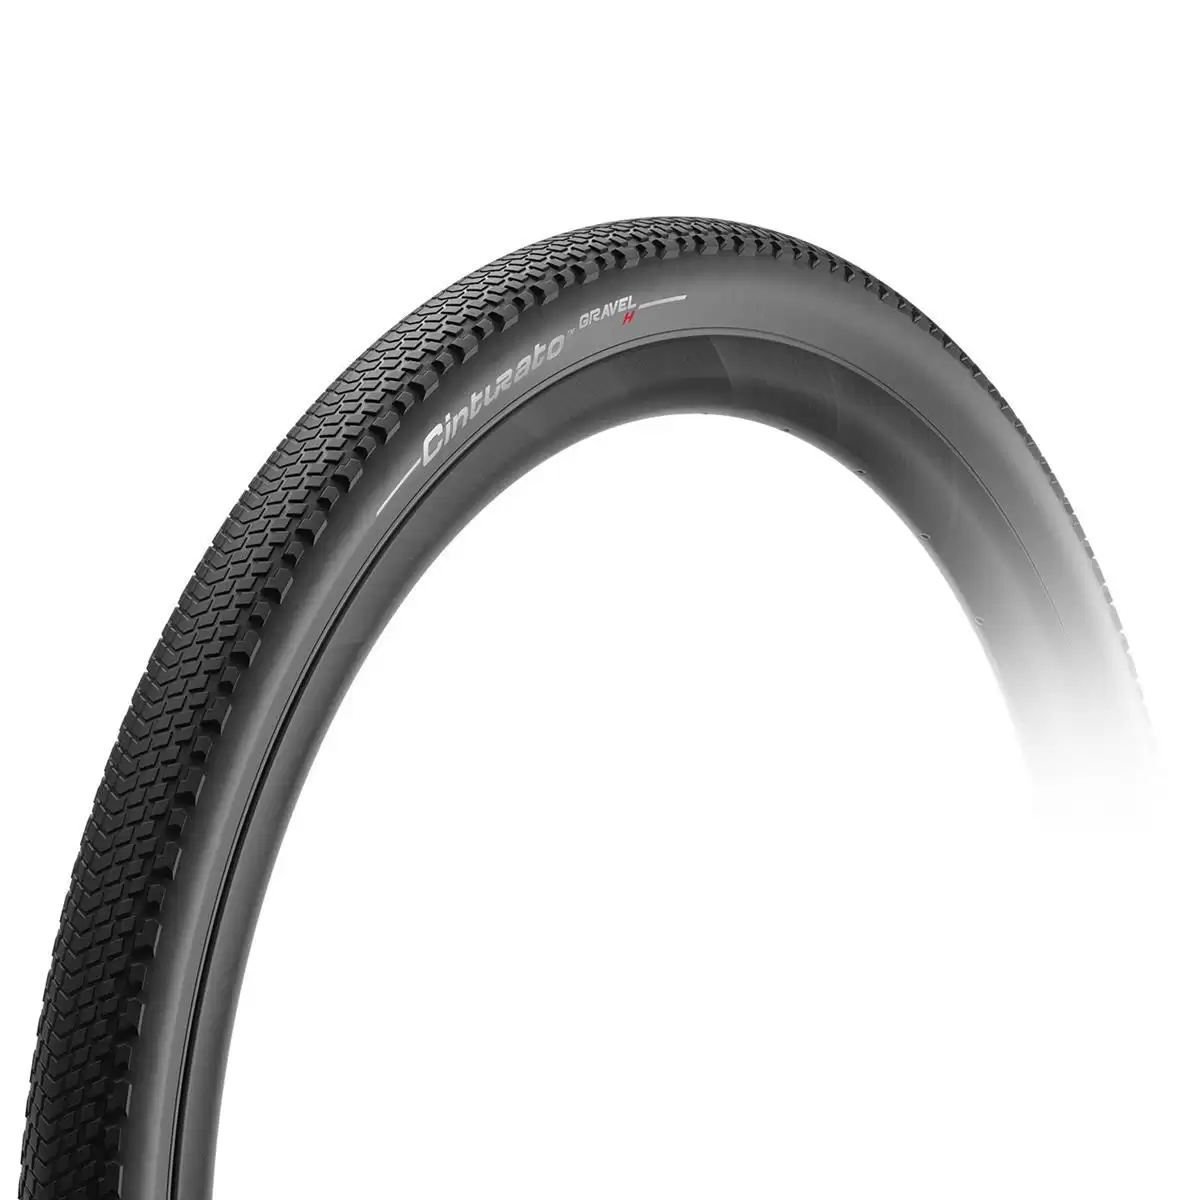 Tire Cinturato Gravel Hard Terrain 700x40c Tubeless Ready Black - image